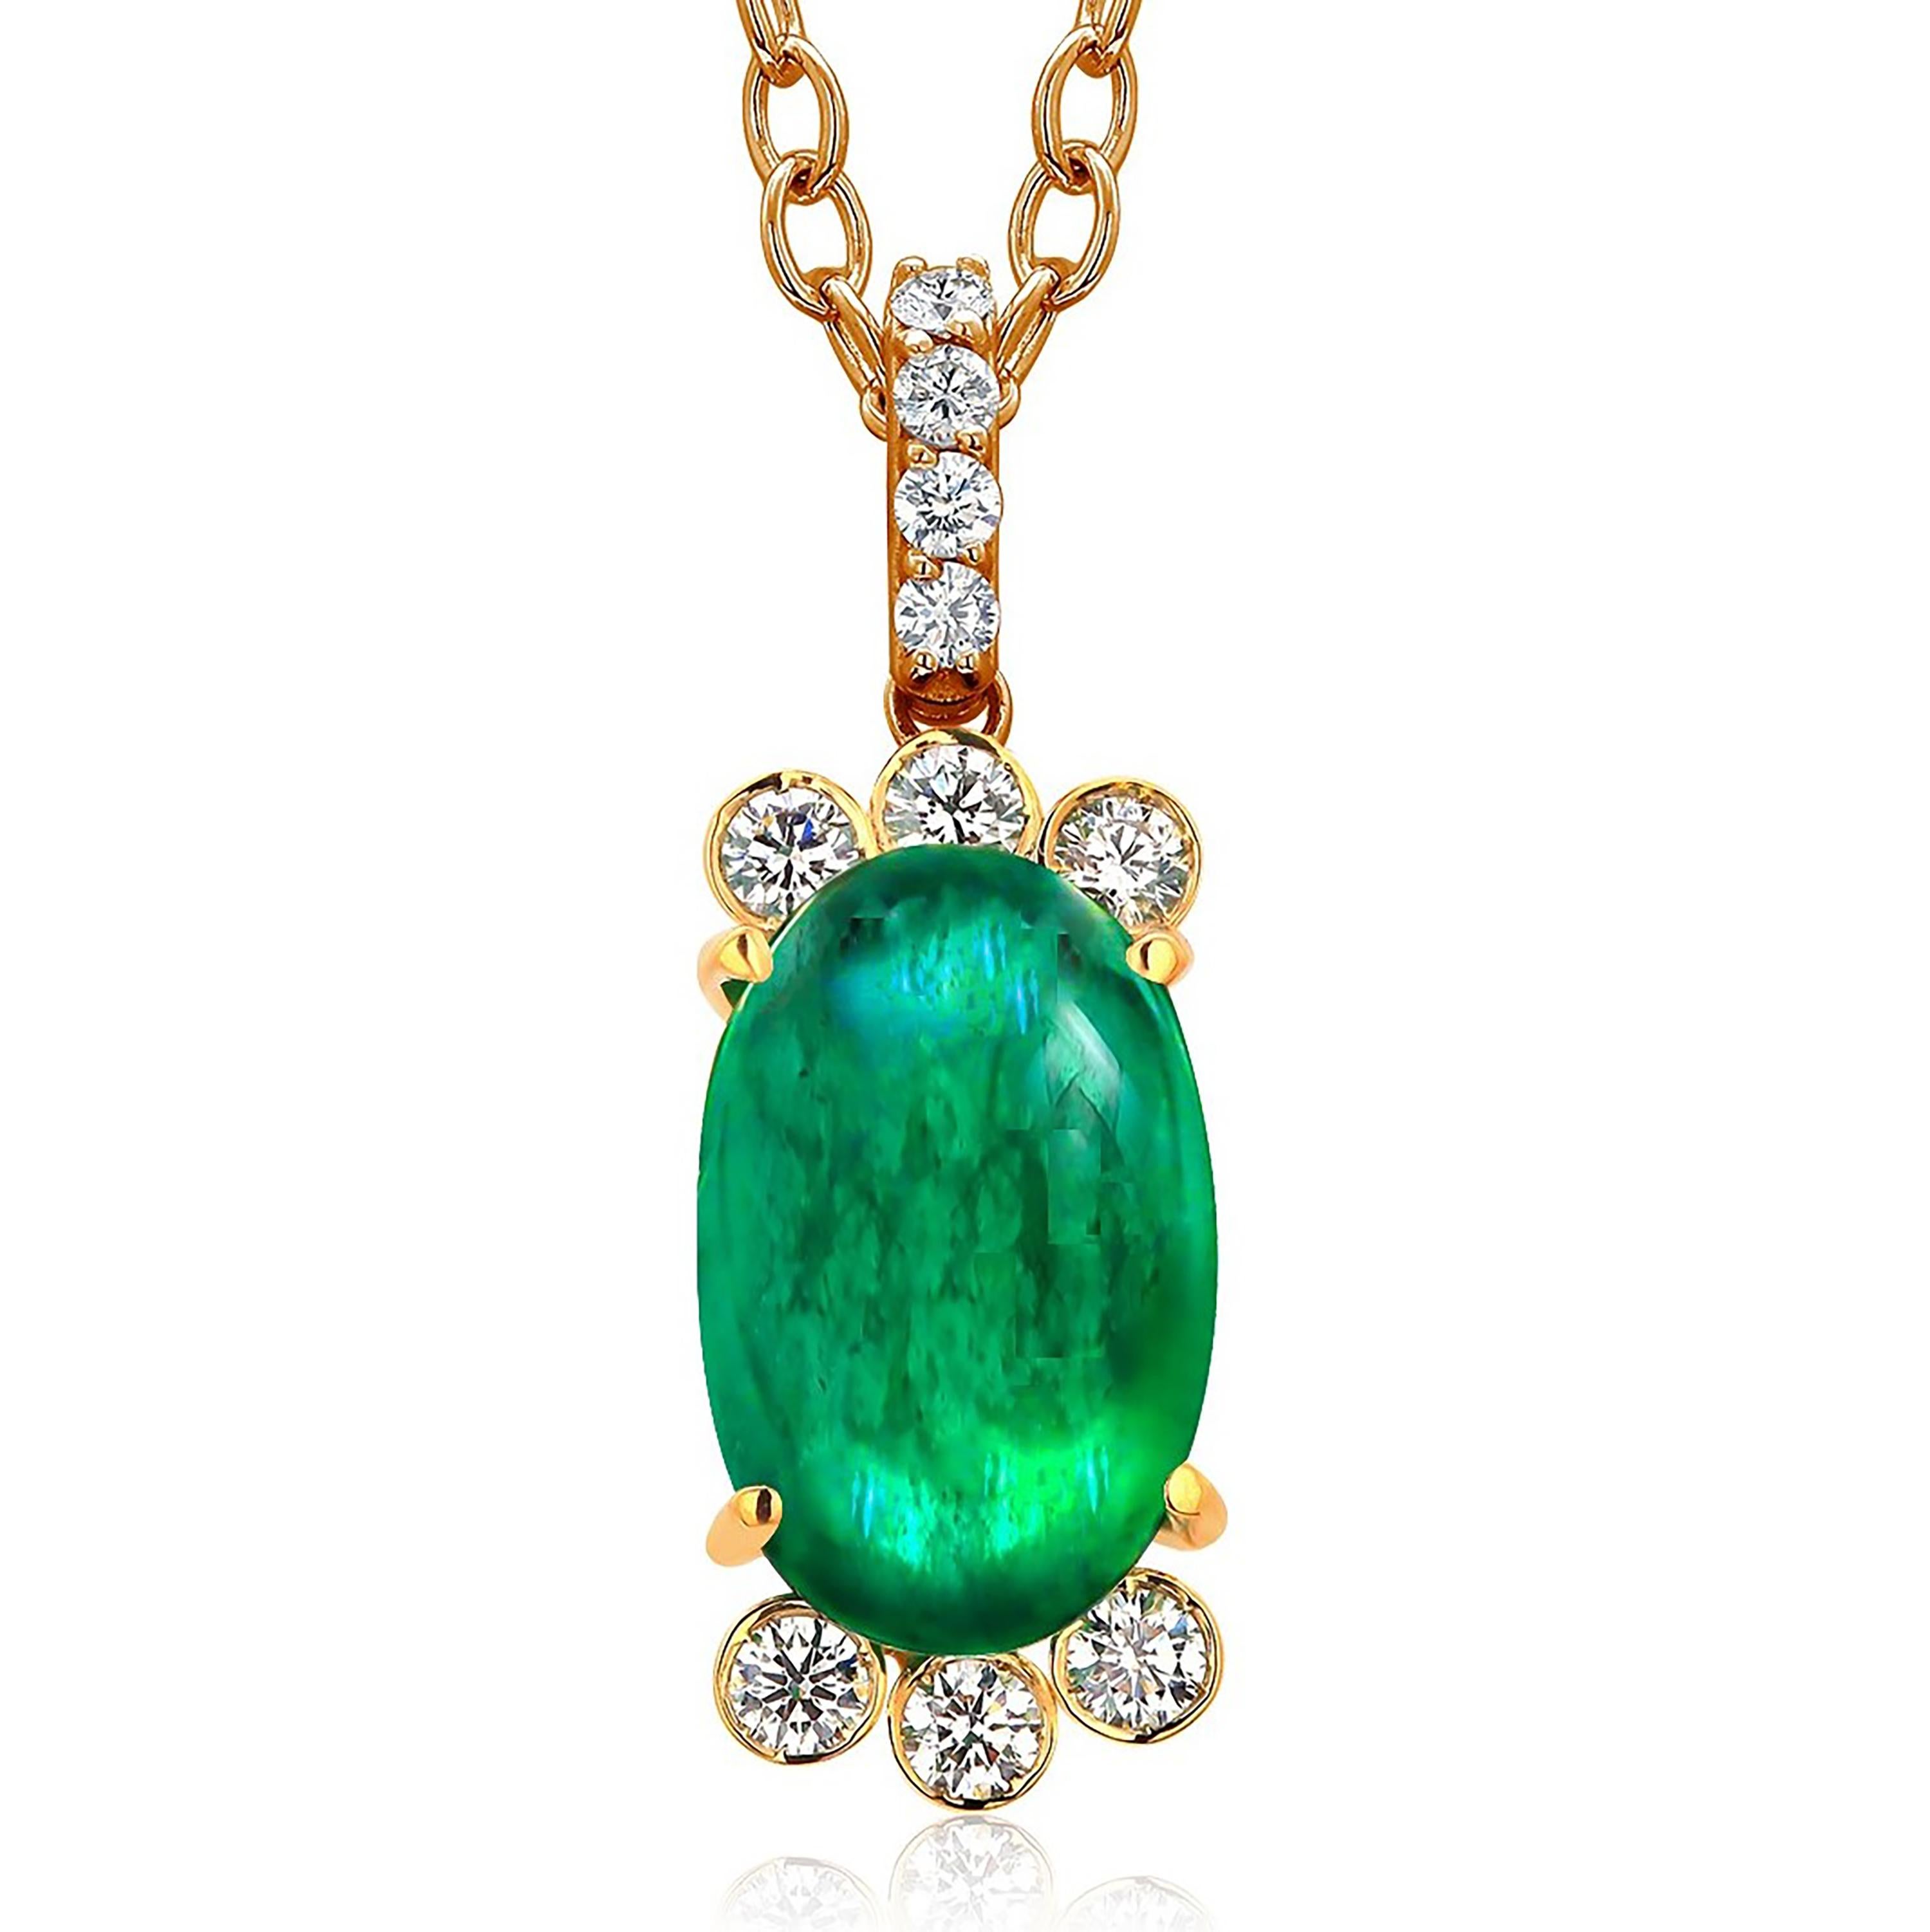 Contemporary Colombia Cabochon Emerald and Diamonds 18 Karat Gold Pendant Necklace